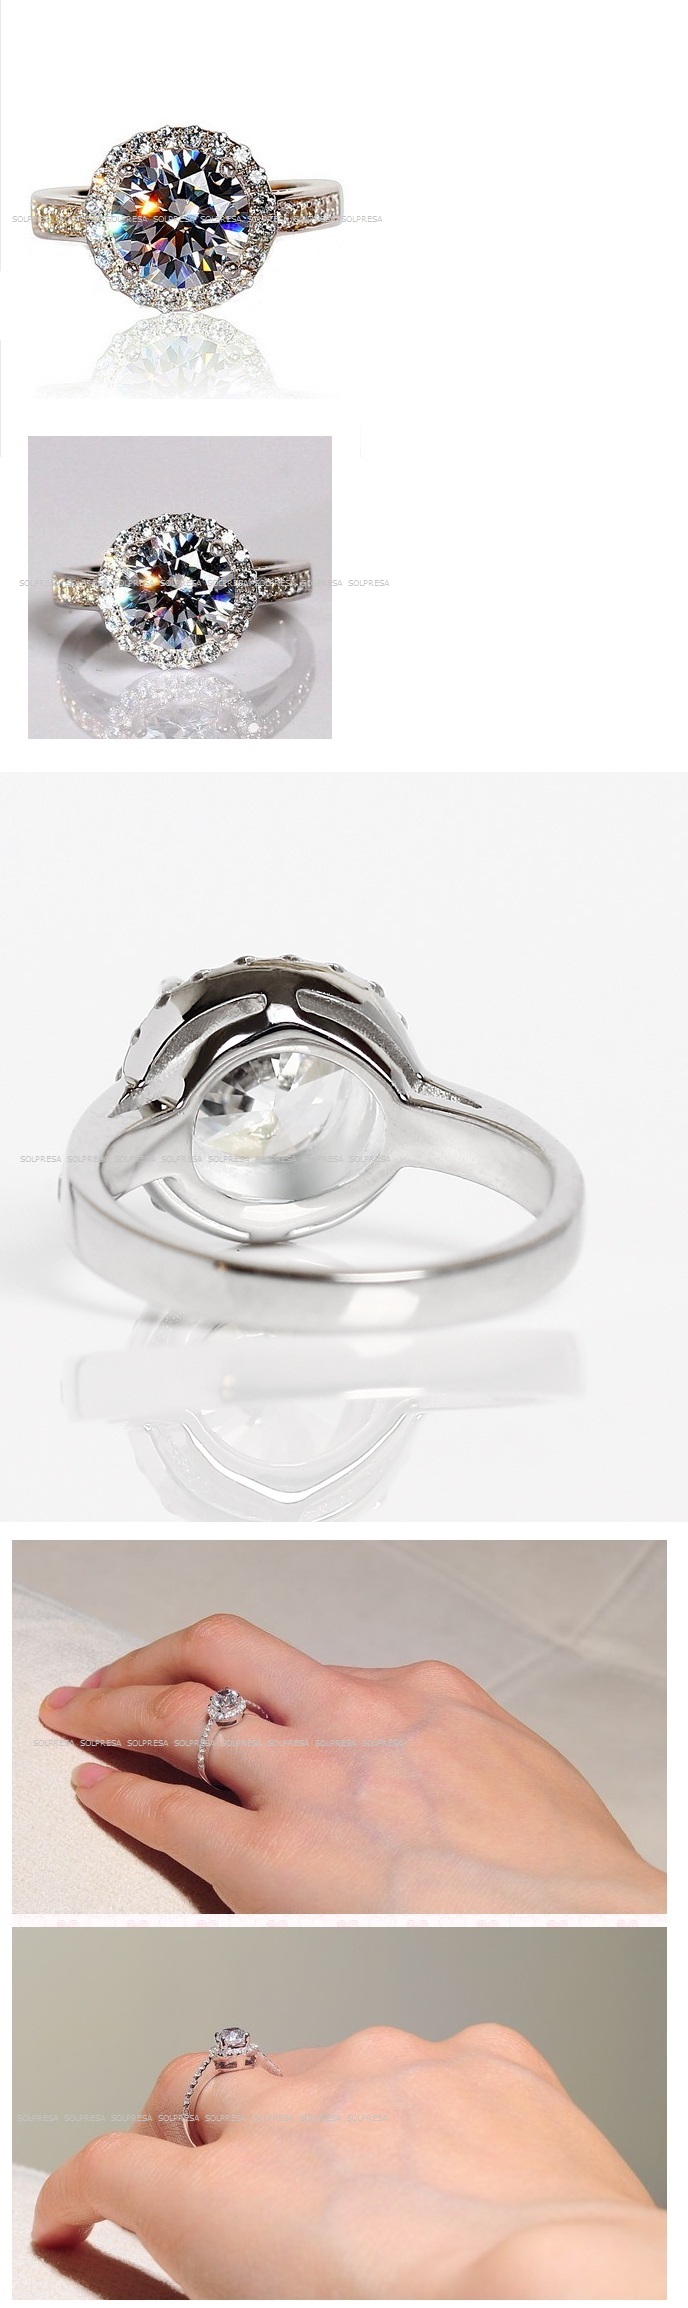 SOLPRESA Italy Royal Luxury 2 Karat Pigeon Diamond Ring